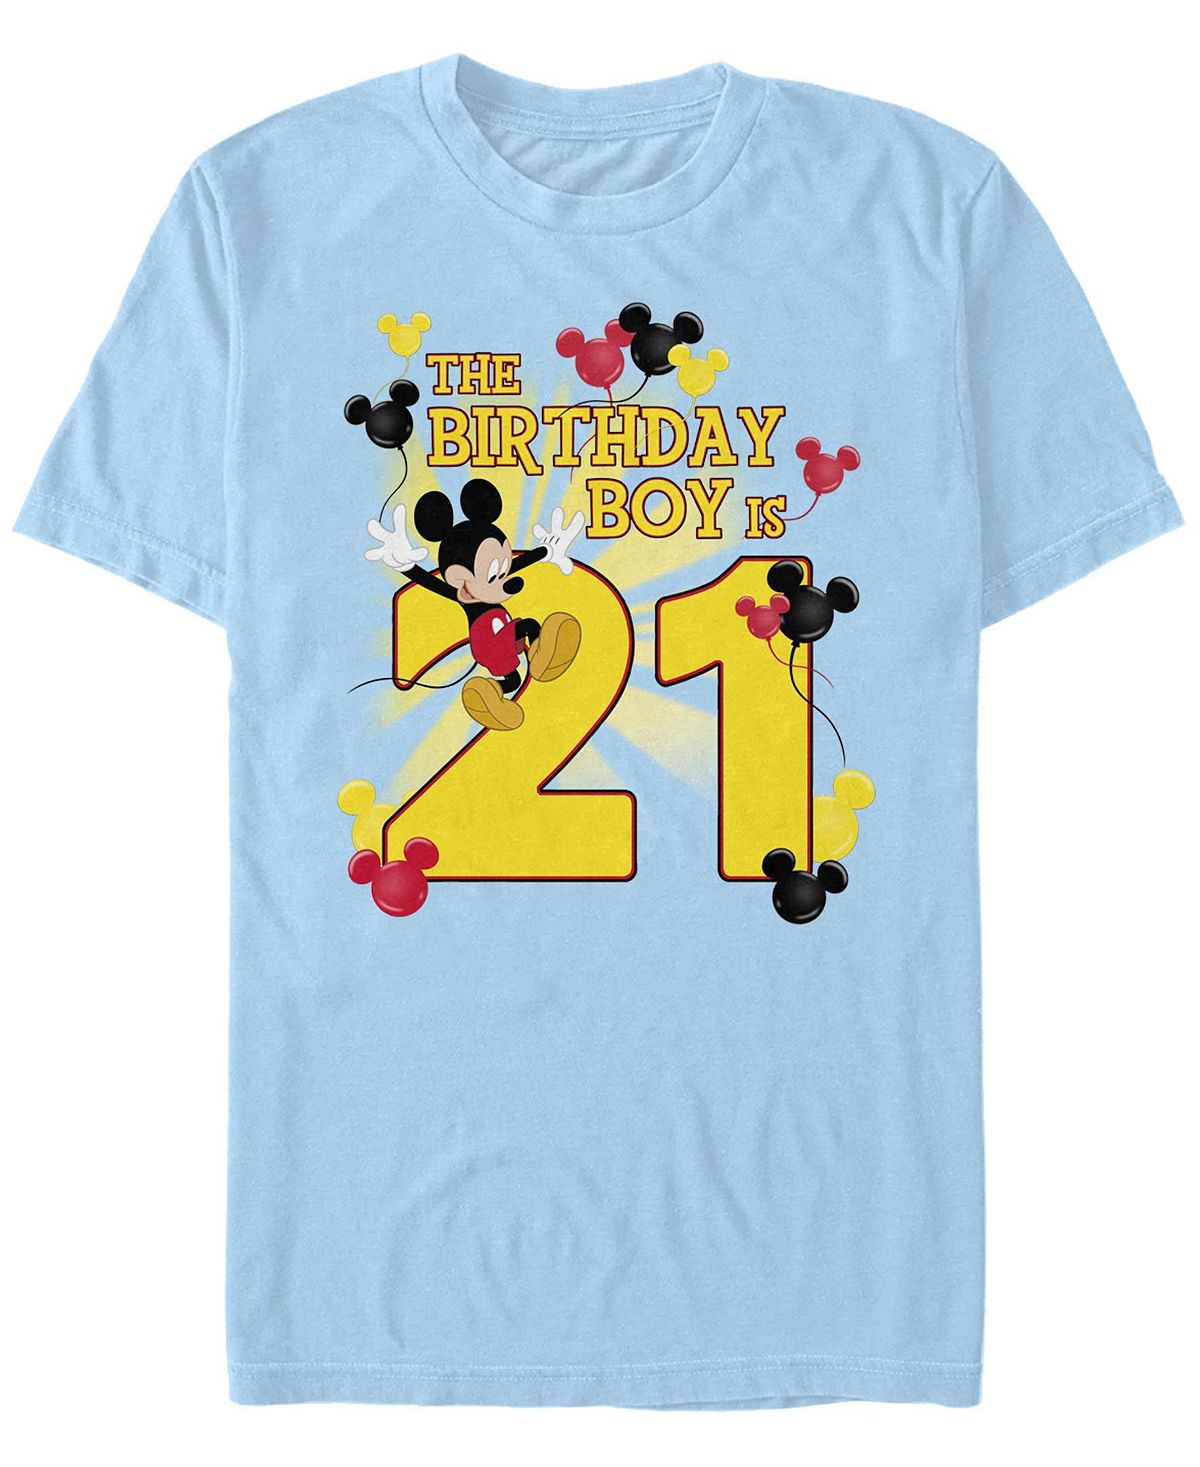 Мужская футболка с круглым вырезом и короткими рукавами mickey birthday 21 Fifth Sun, светло-синий мужская футболка mickey irish с короткими рукавами и круглым вырезом fifth sun зеленый